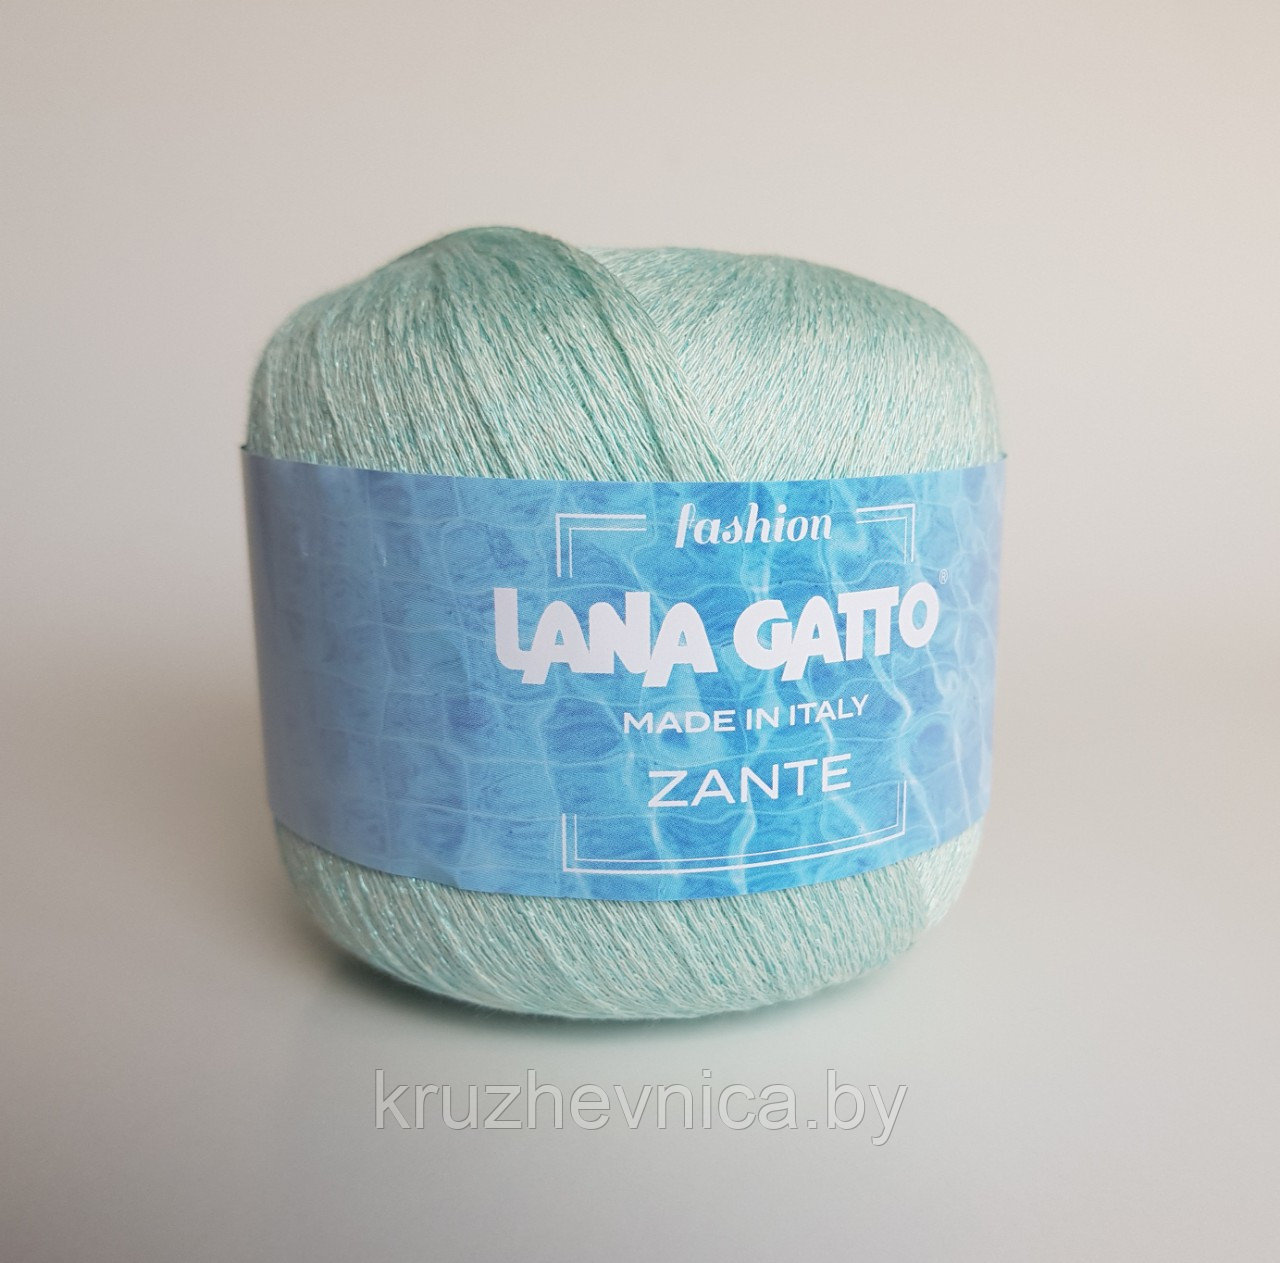 Пряжа Lana Gatto Zante (78% хлопок, 22% полиэстер), 50г/265м, цвет 8635 verdo chiaro